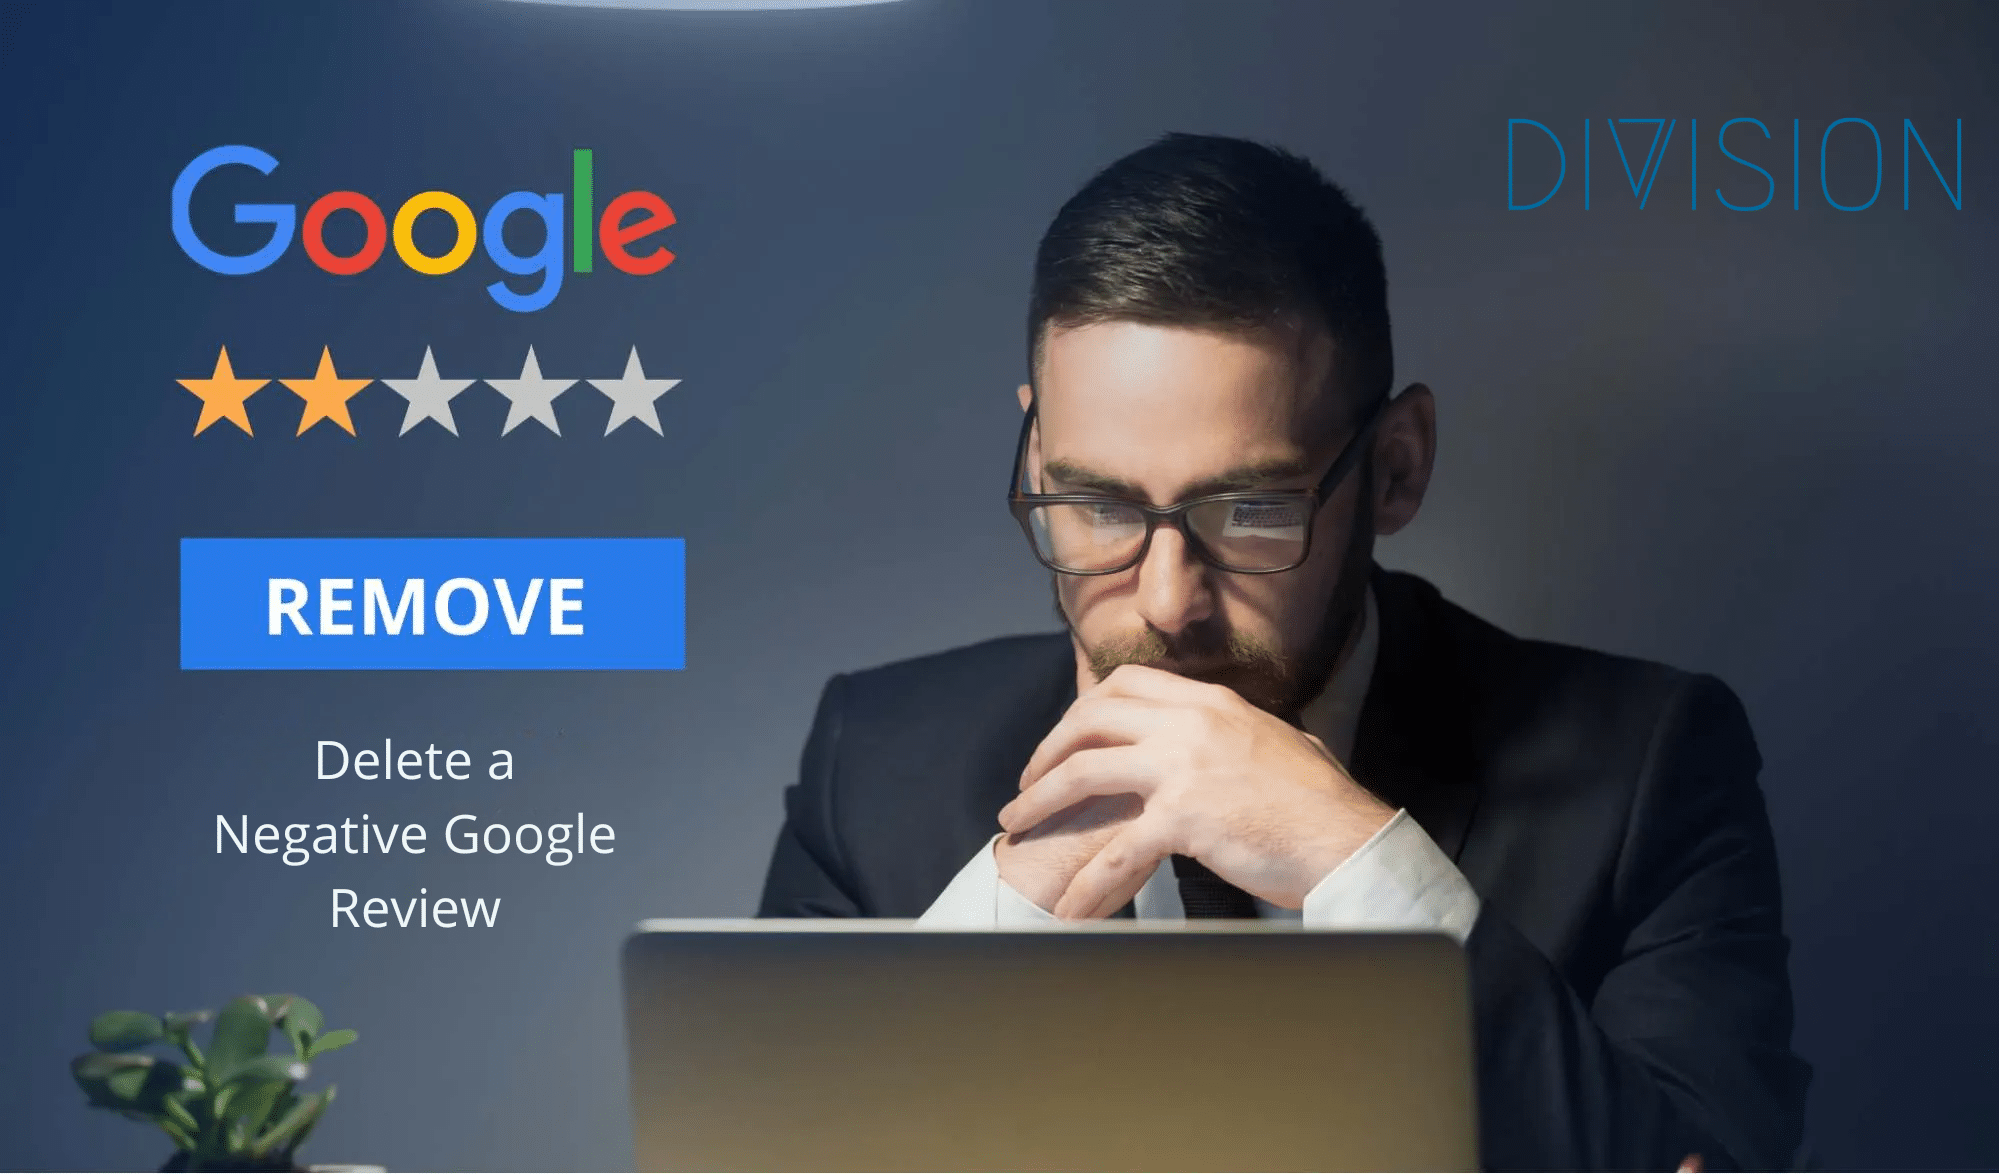 Delete a Negative Google Review